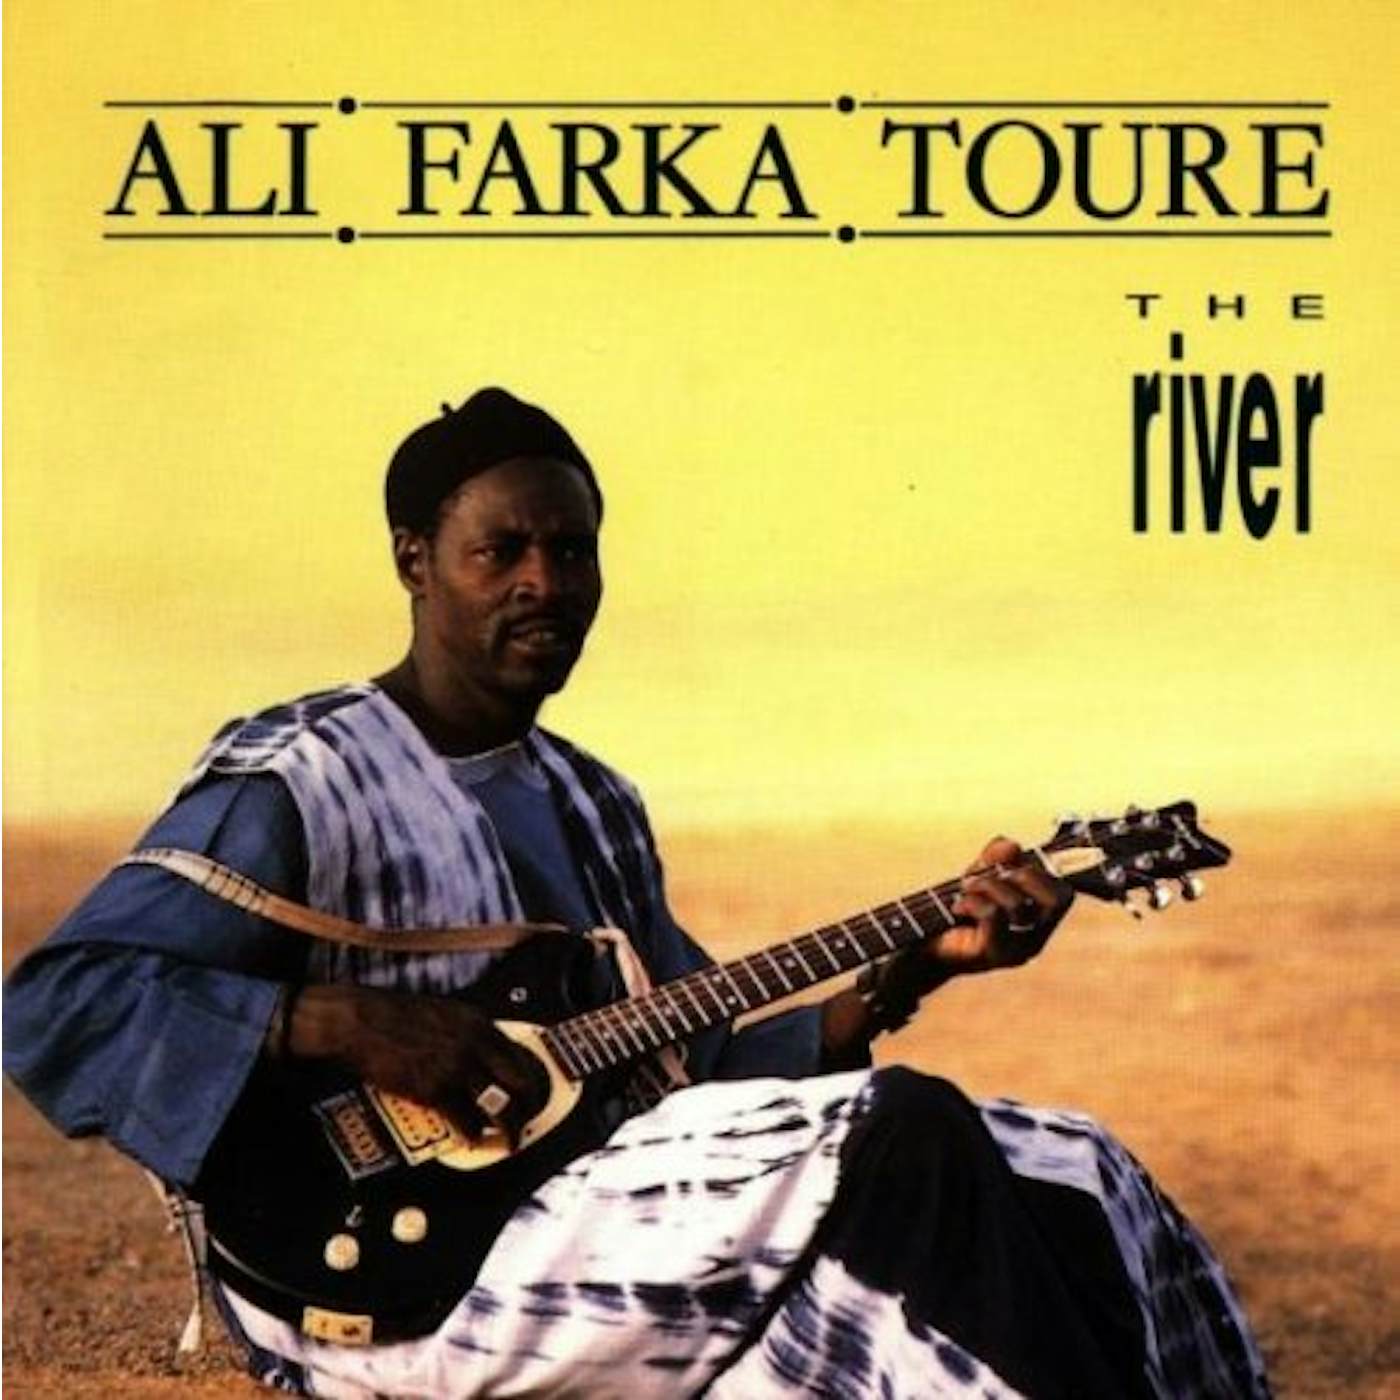 Ali Farka Touré RIVER CD